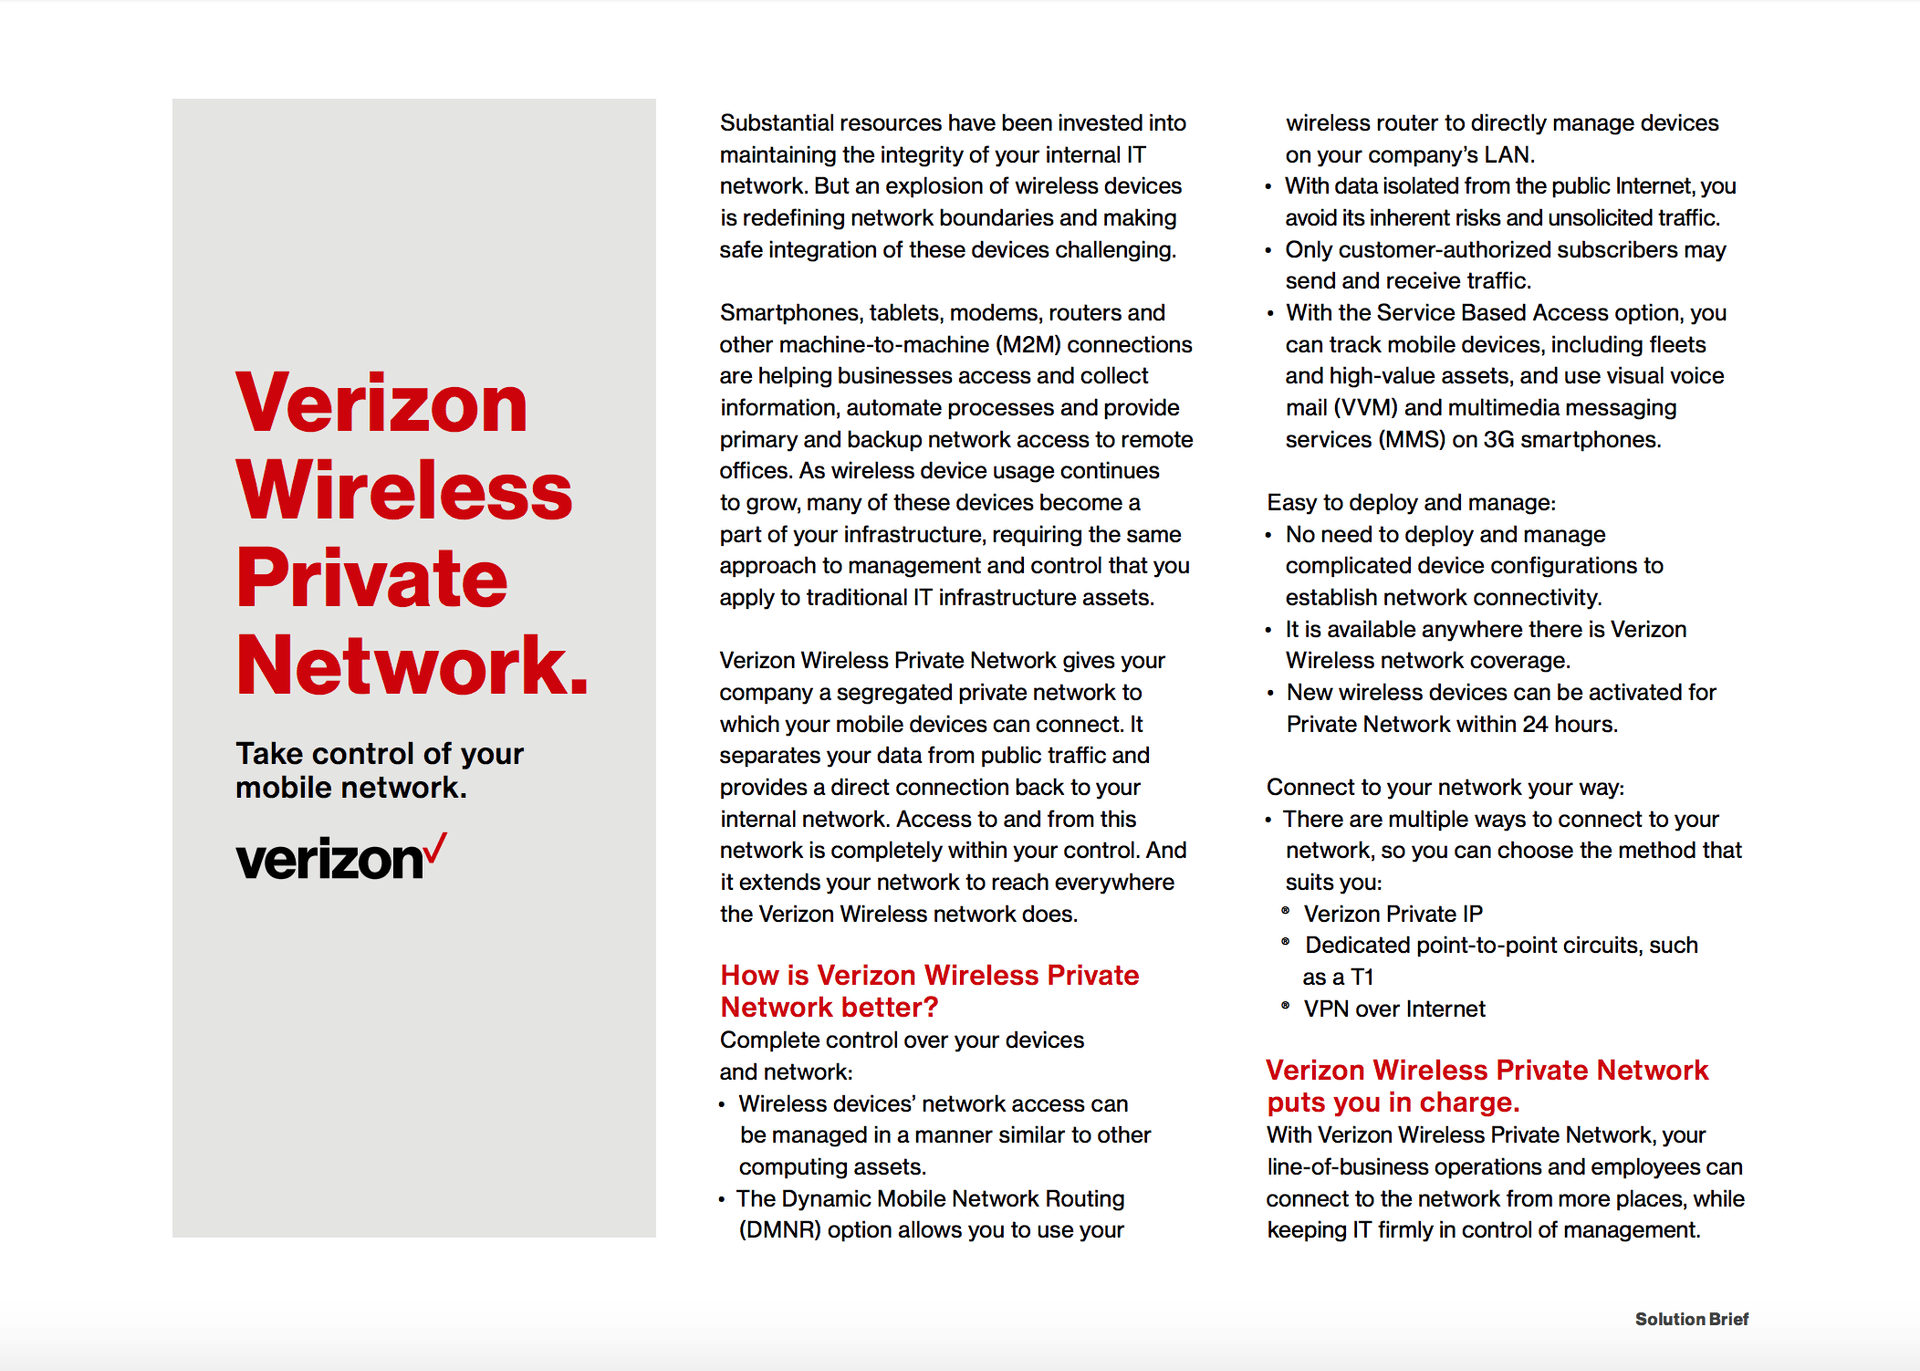 Are Verizon FIOS and Verizon Wireless the same company? - Quora